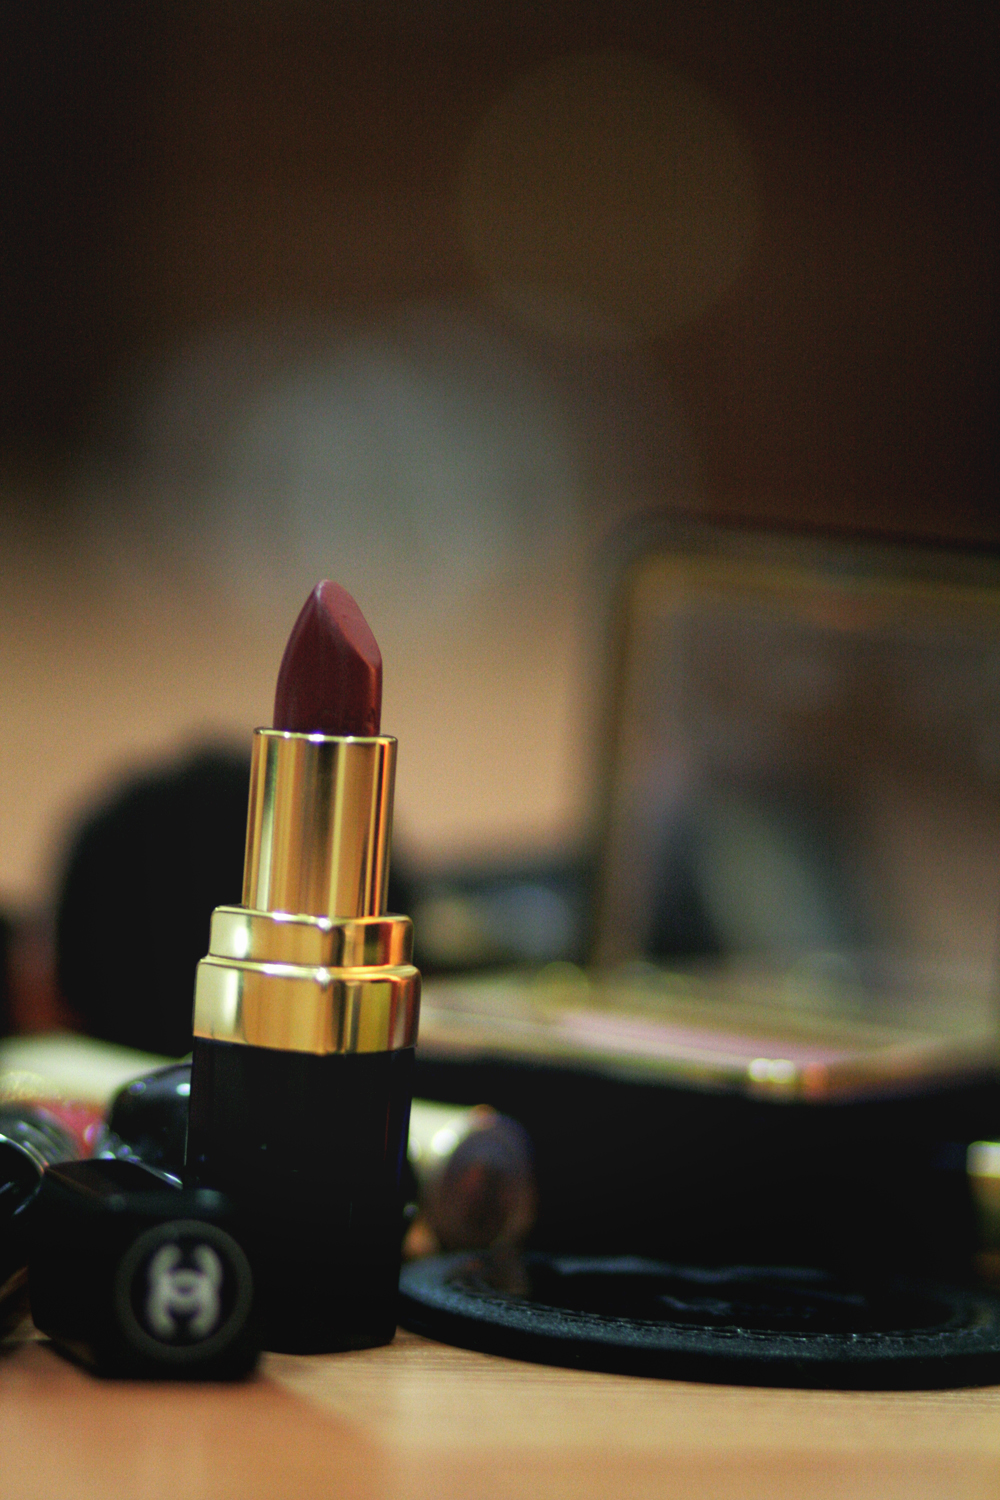 a close up of a lipstick on a desk